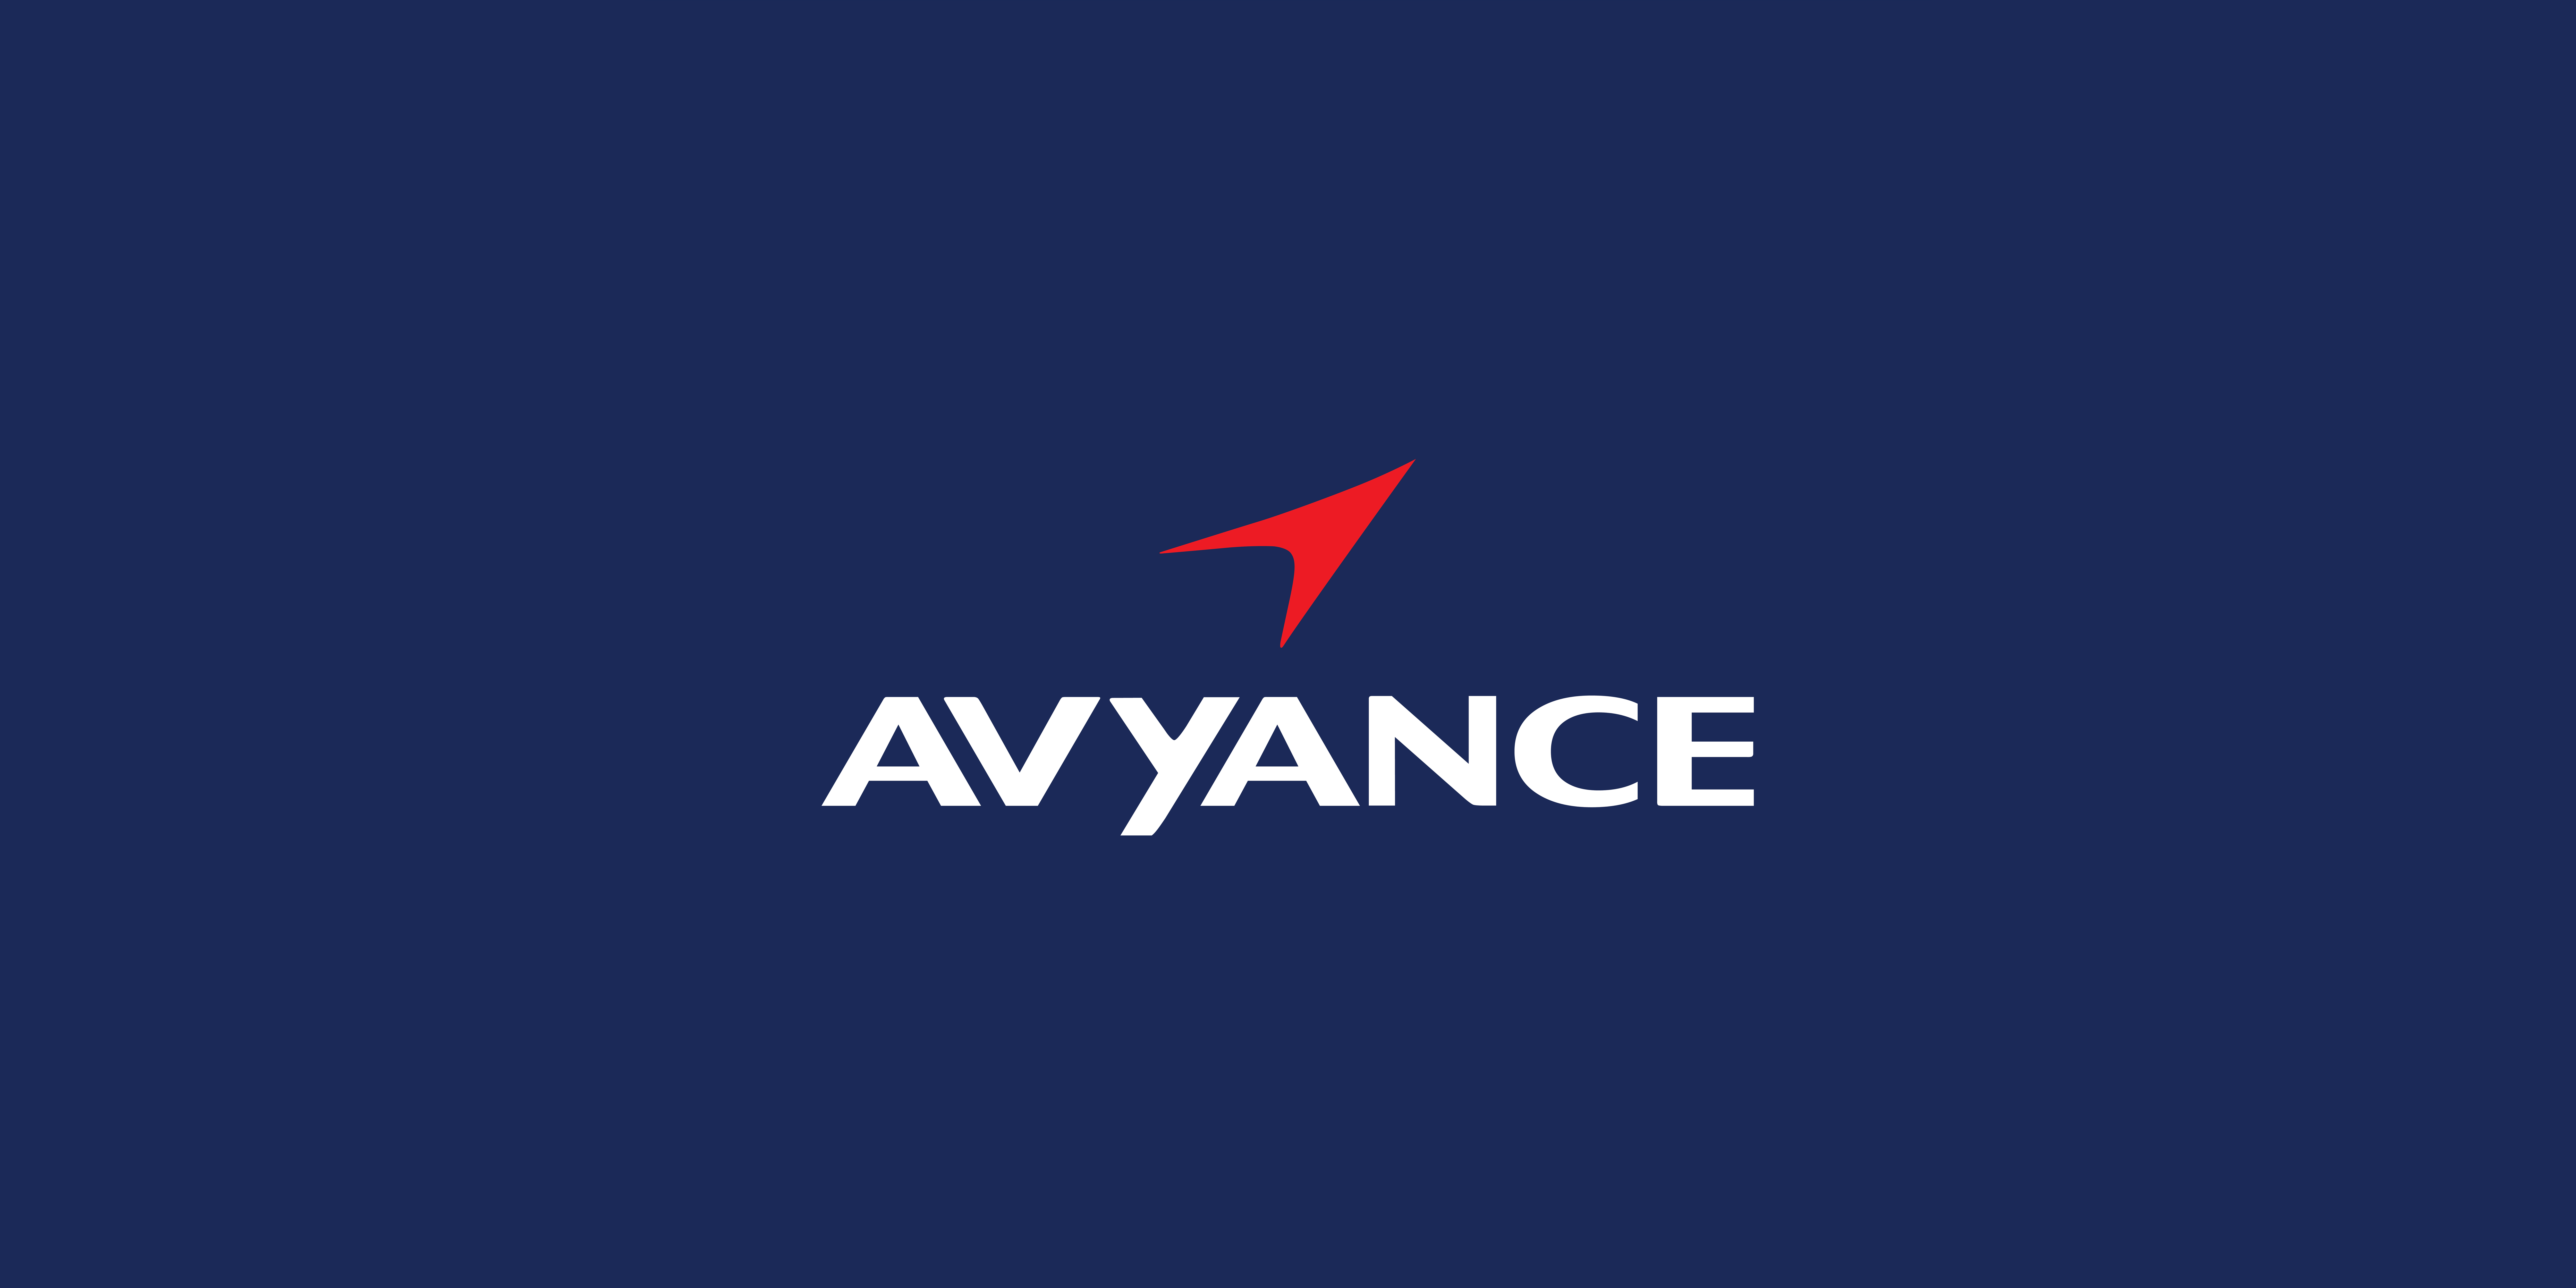 Avyance Logo - Wide